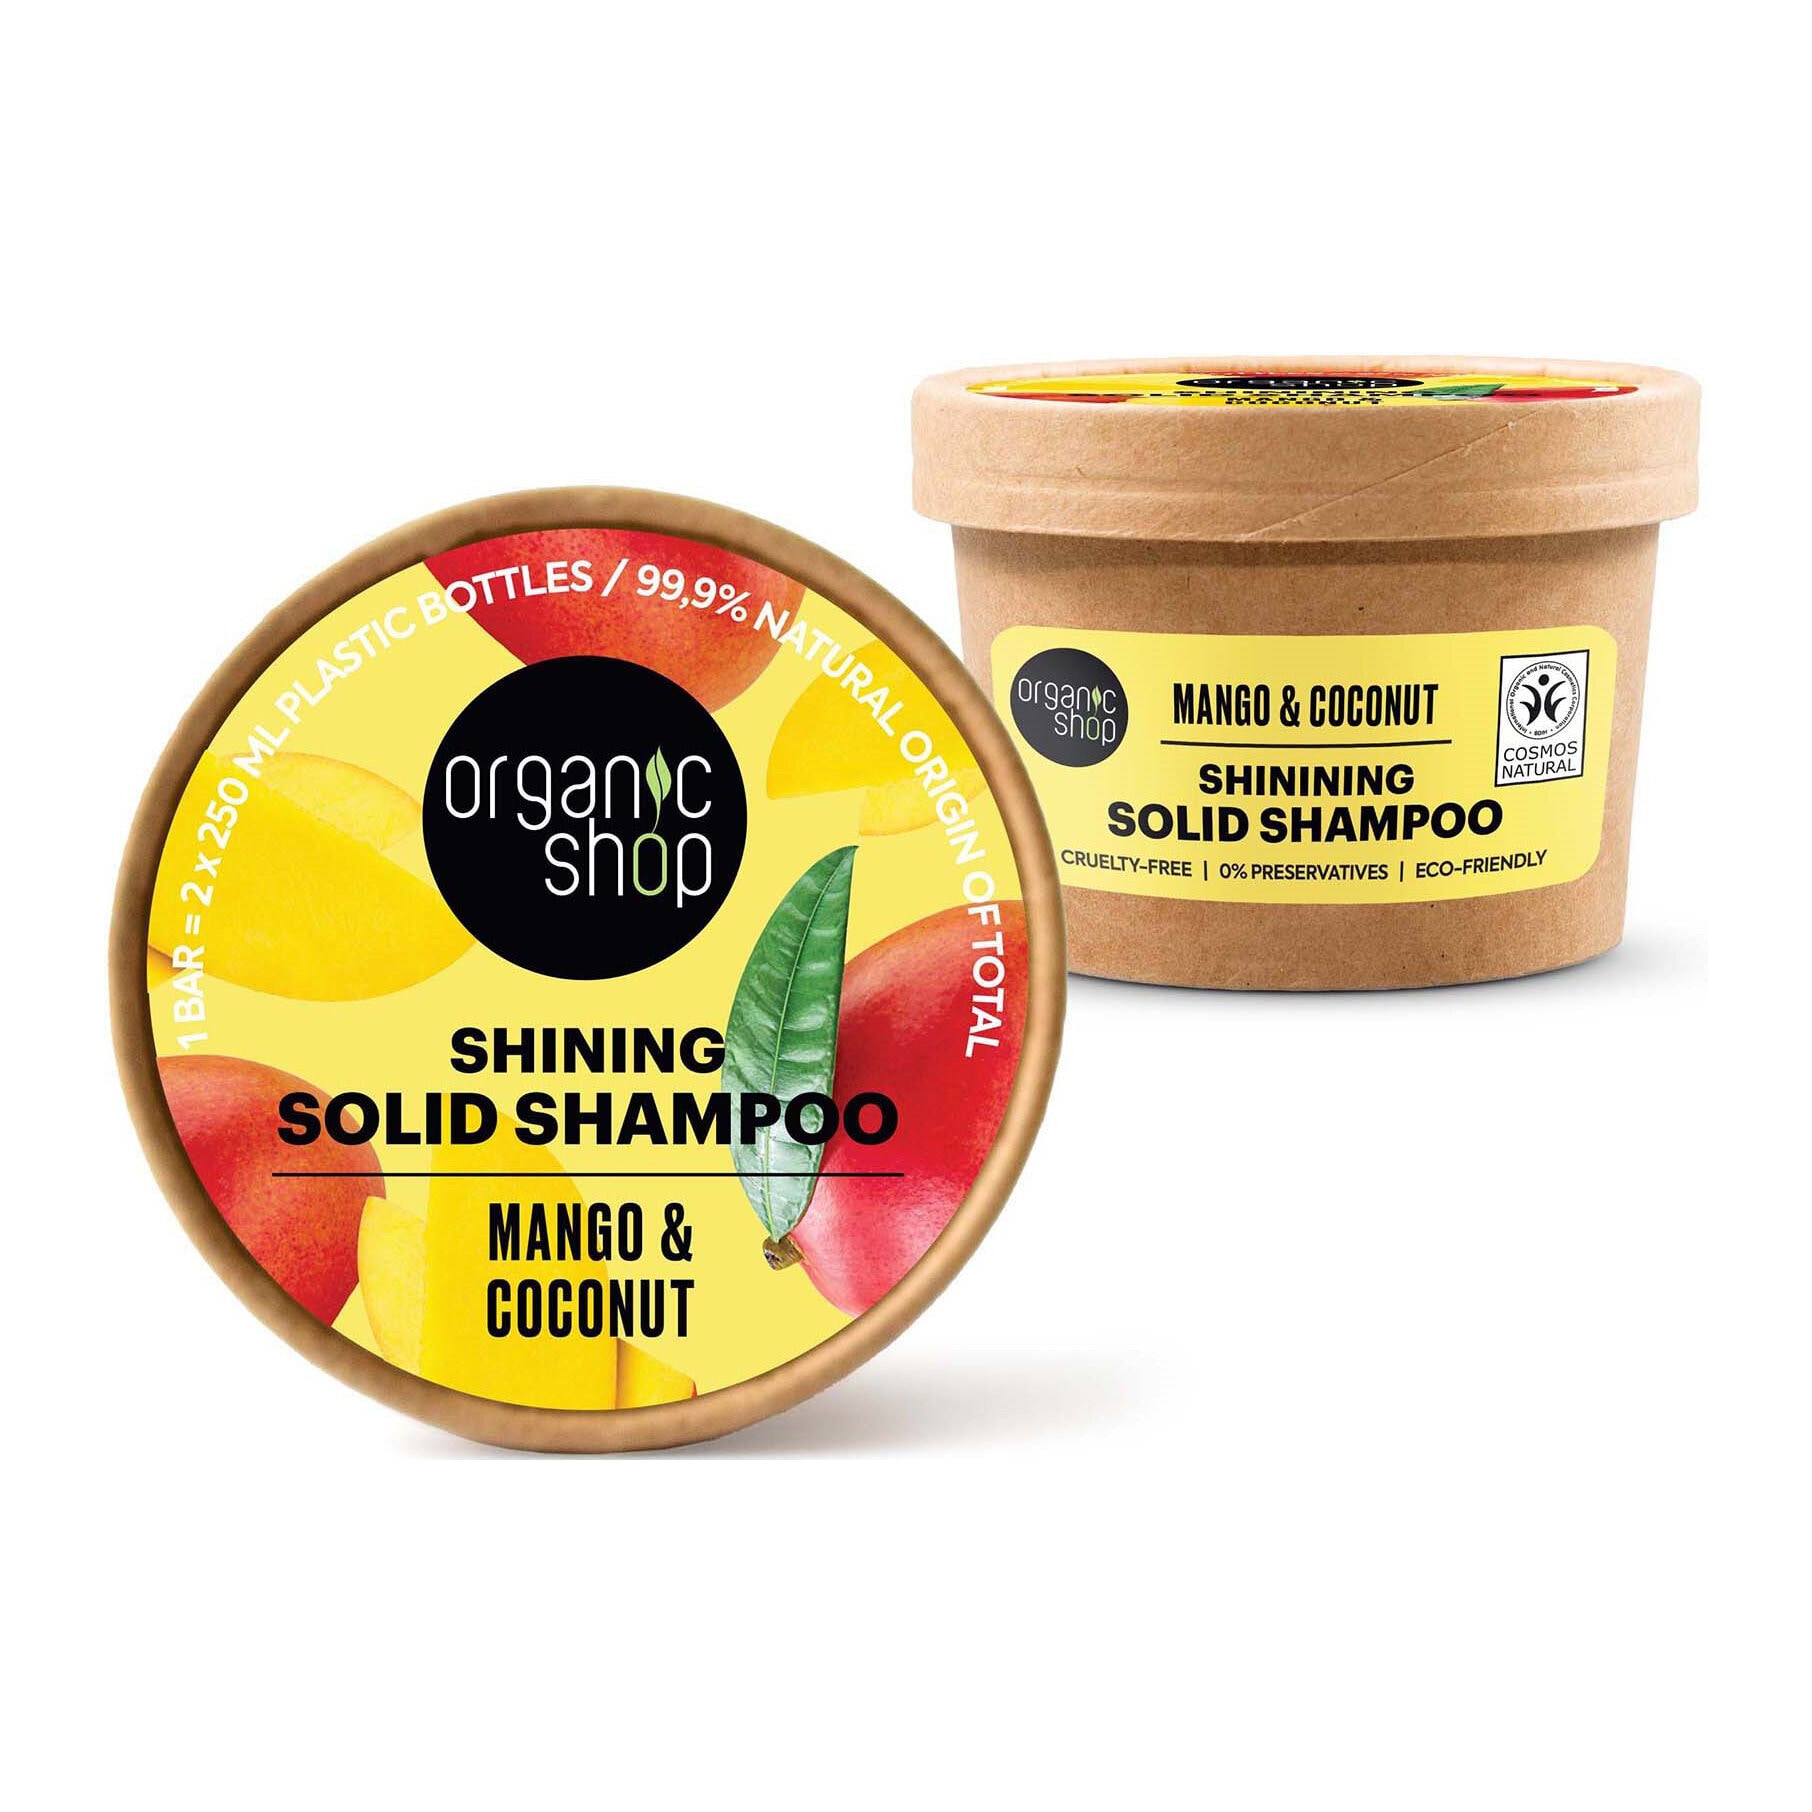 Shining solid shampo Mango & Coconut 60g